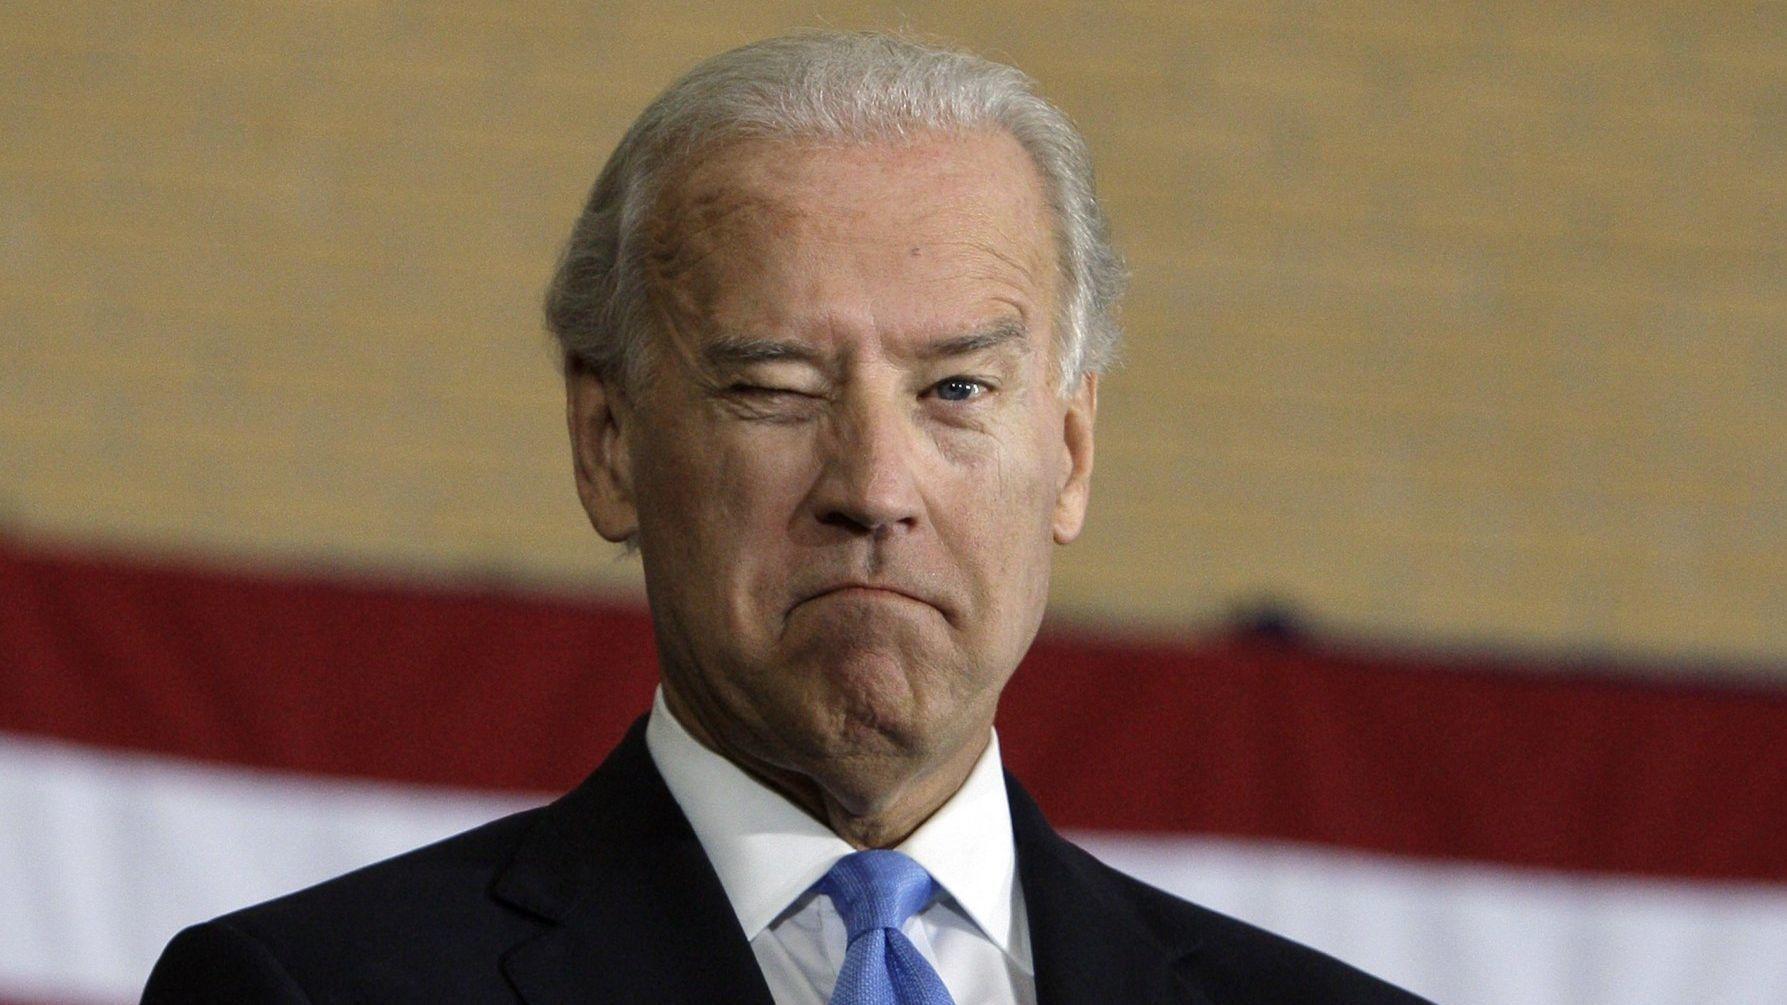 Joe Biden wink